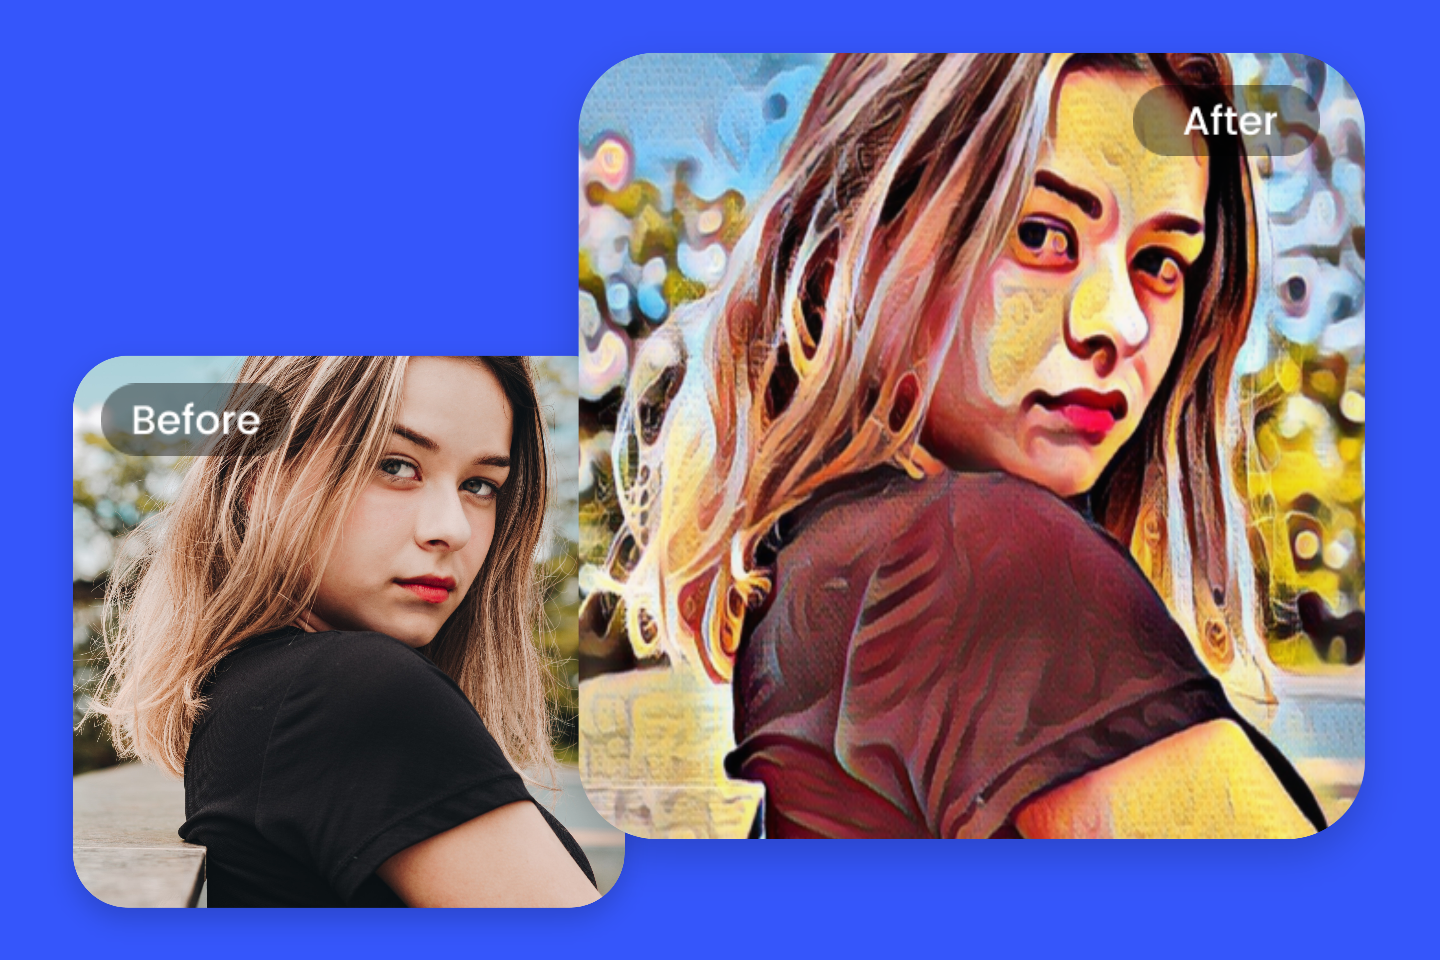 Convert girl image into pop art effect using fotor pop art tool